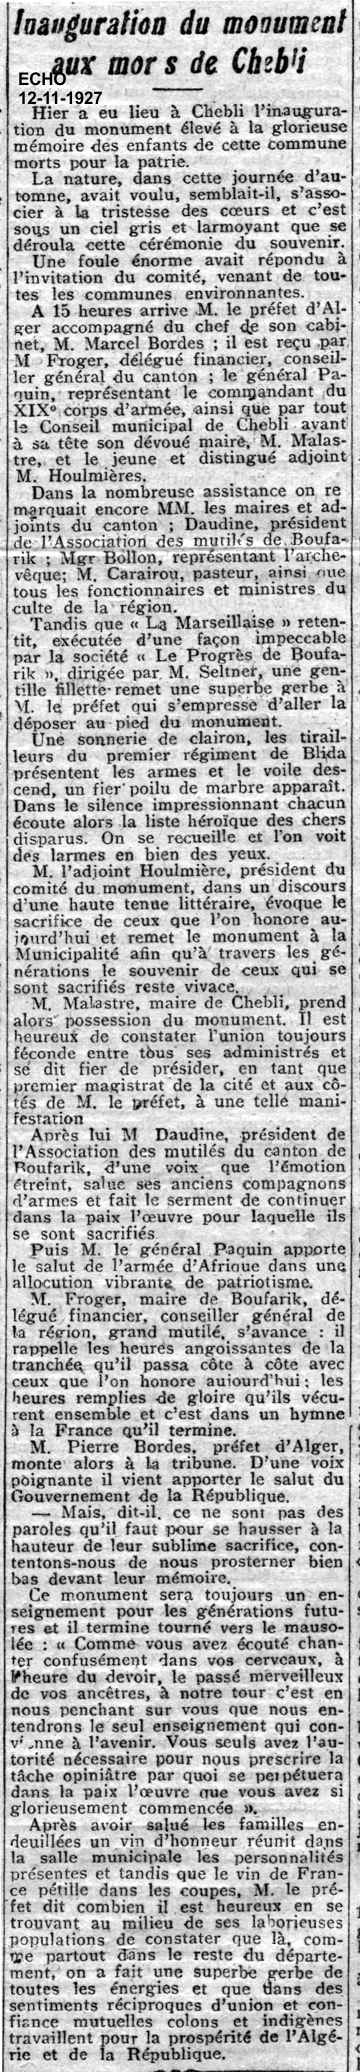 Inauguration du Monument aux Morts- 1927 